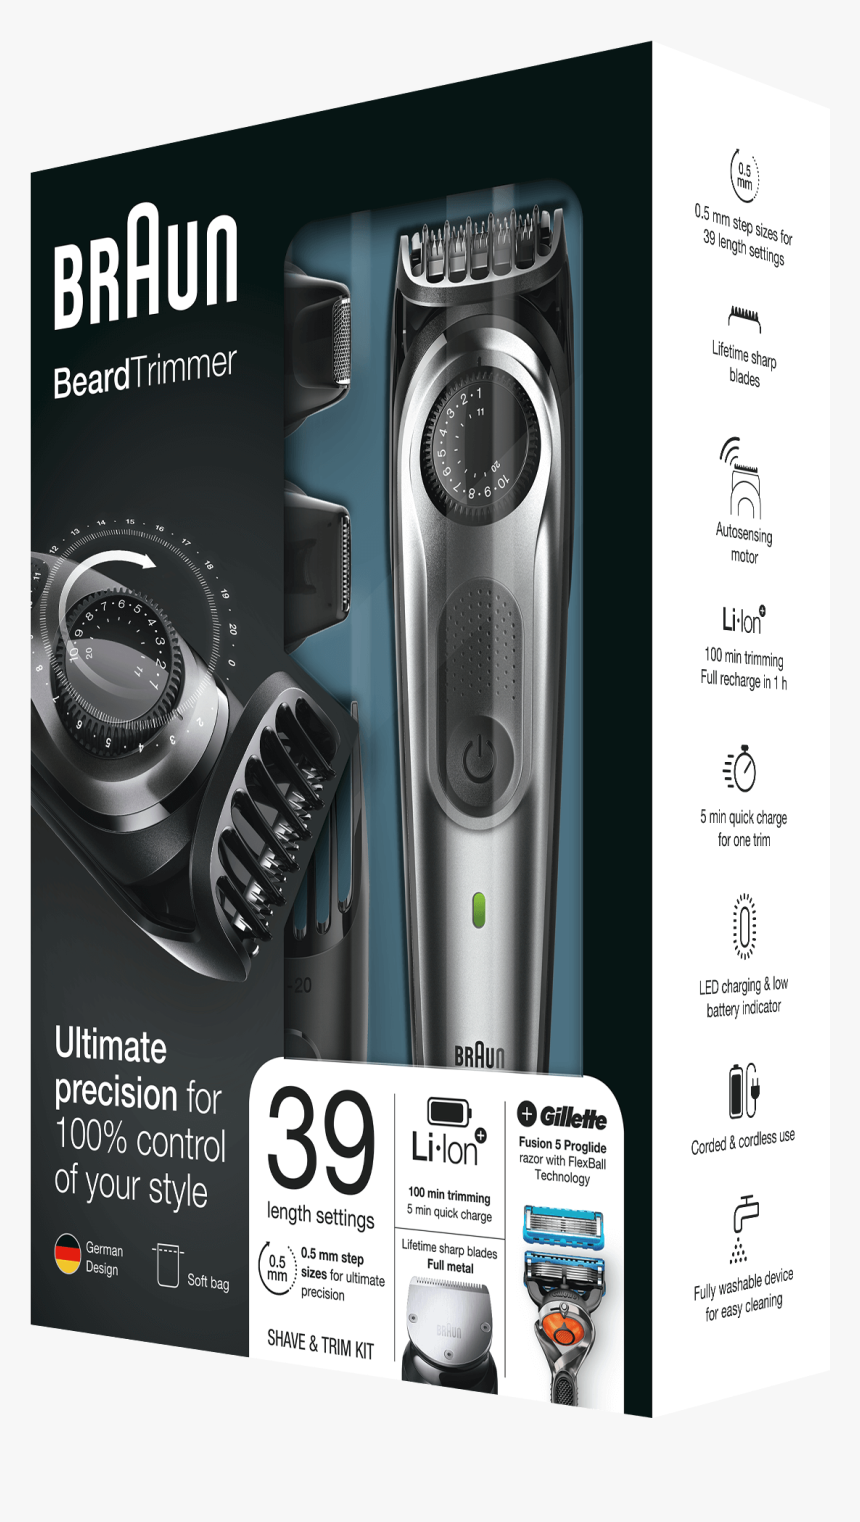 Braun Bt7020 Beard Trimmer - Braun Beard Trimmer Bt7020, HD Png Download, Free Download